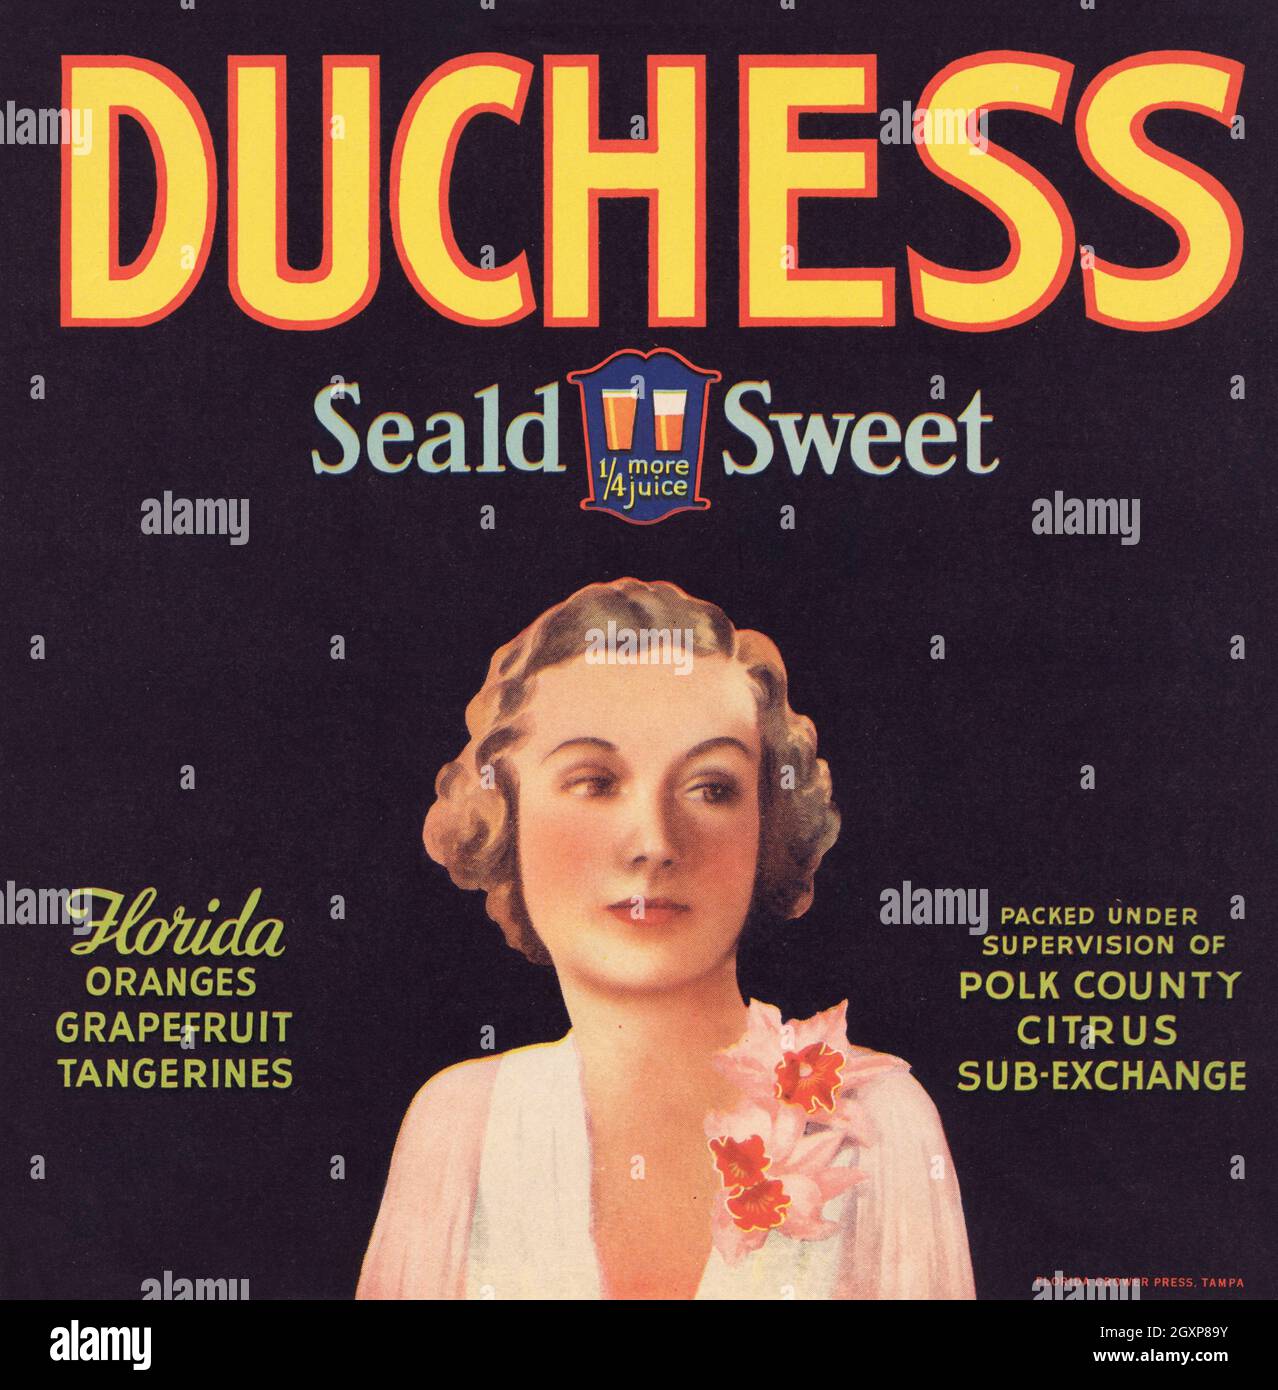 Duchess Seald Sweet Stock Photo